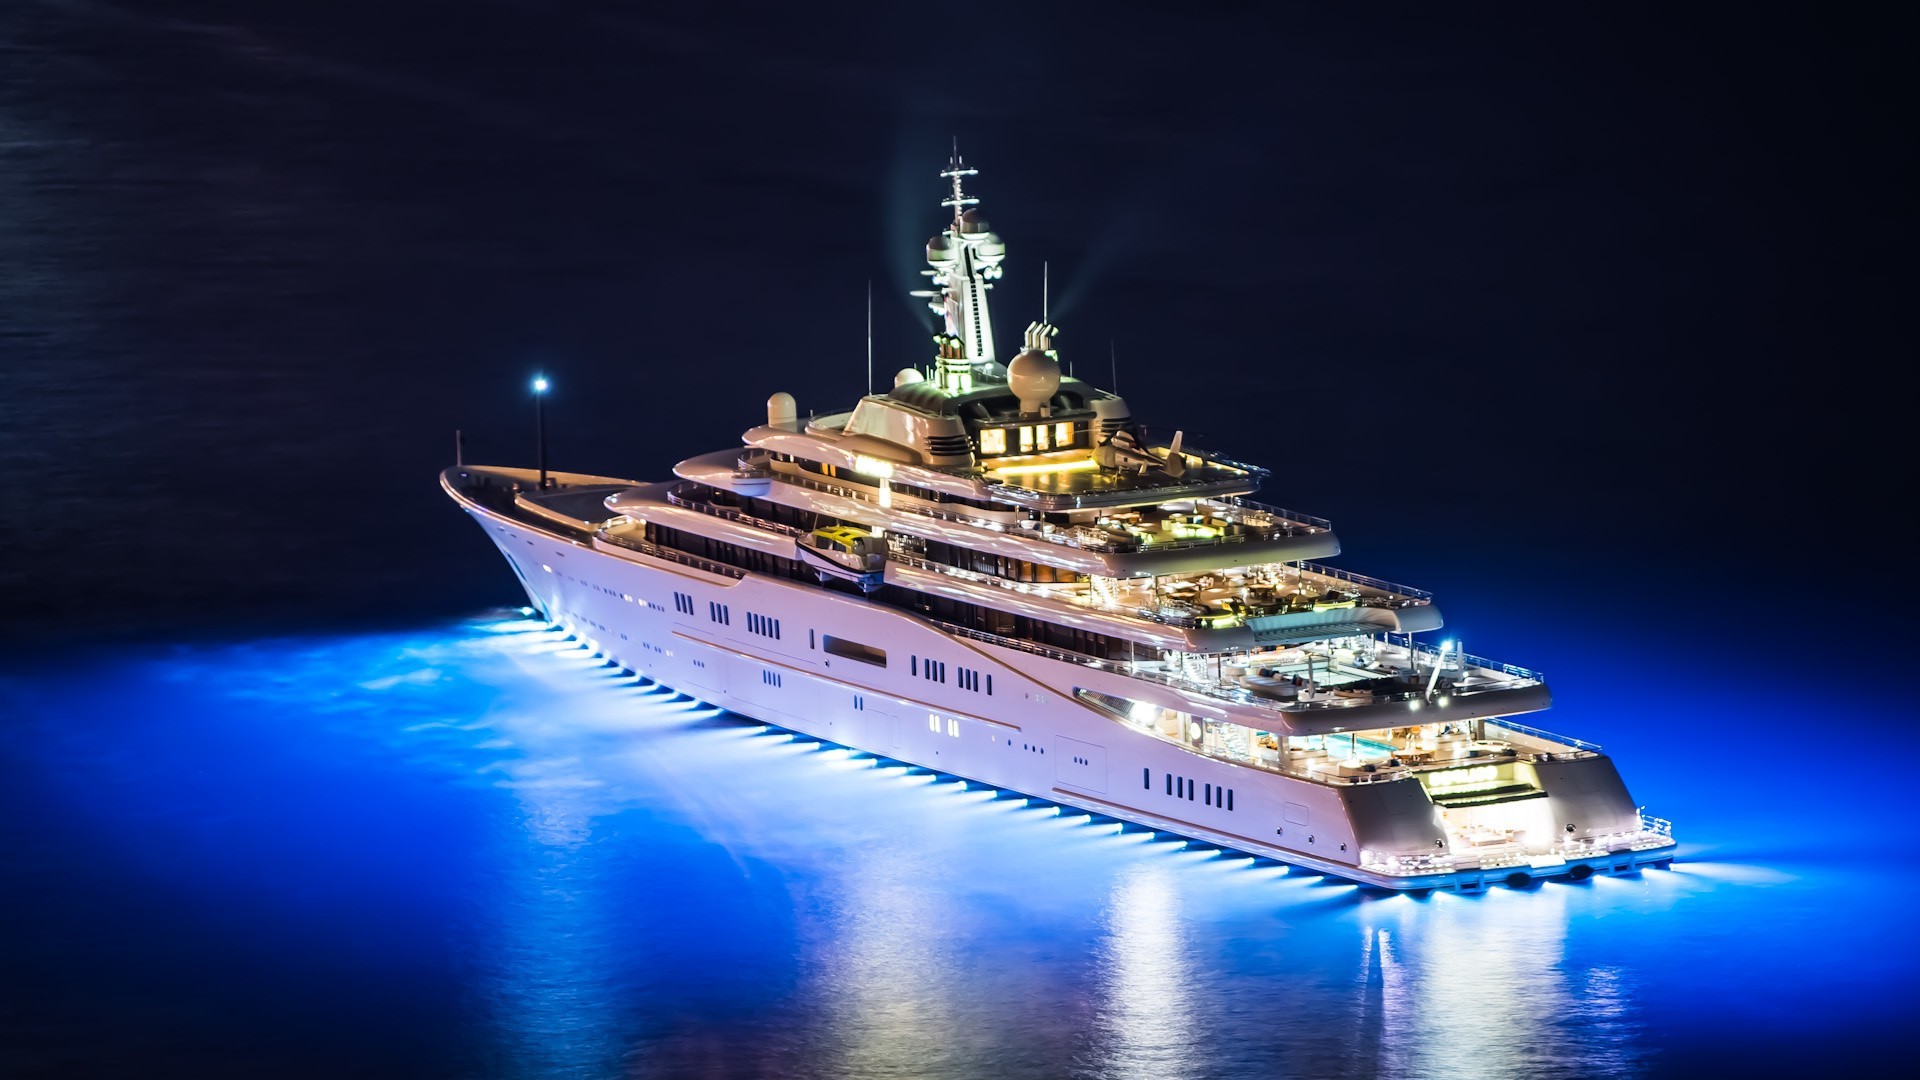 yacht in night